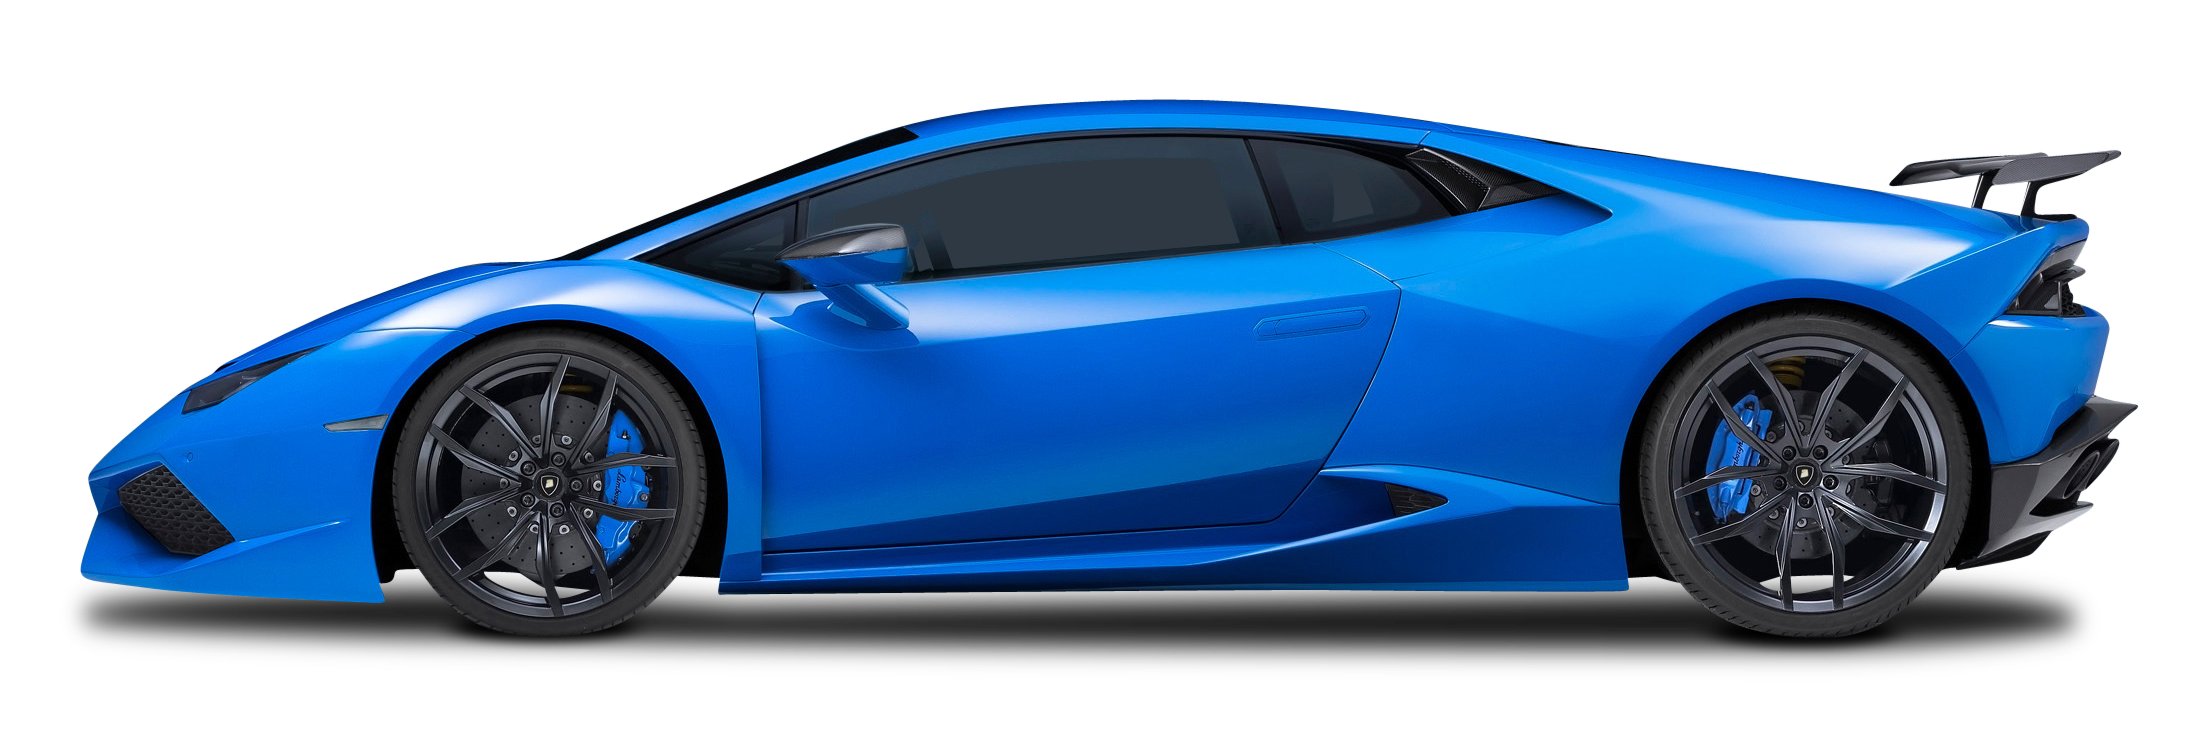 Lamborghini Veneno PNG Images HD